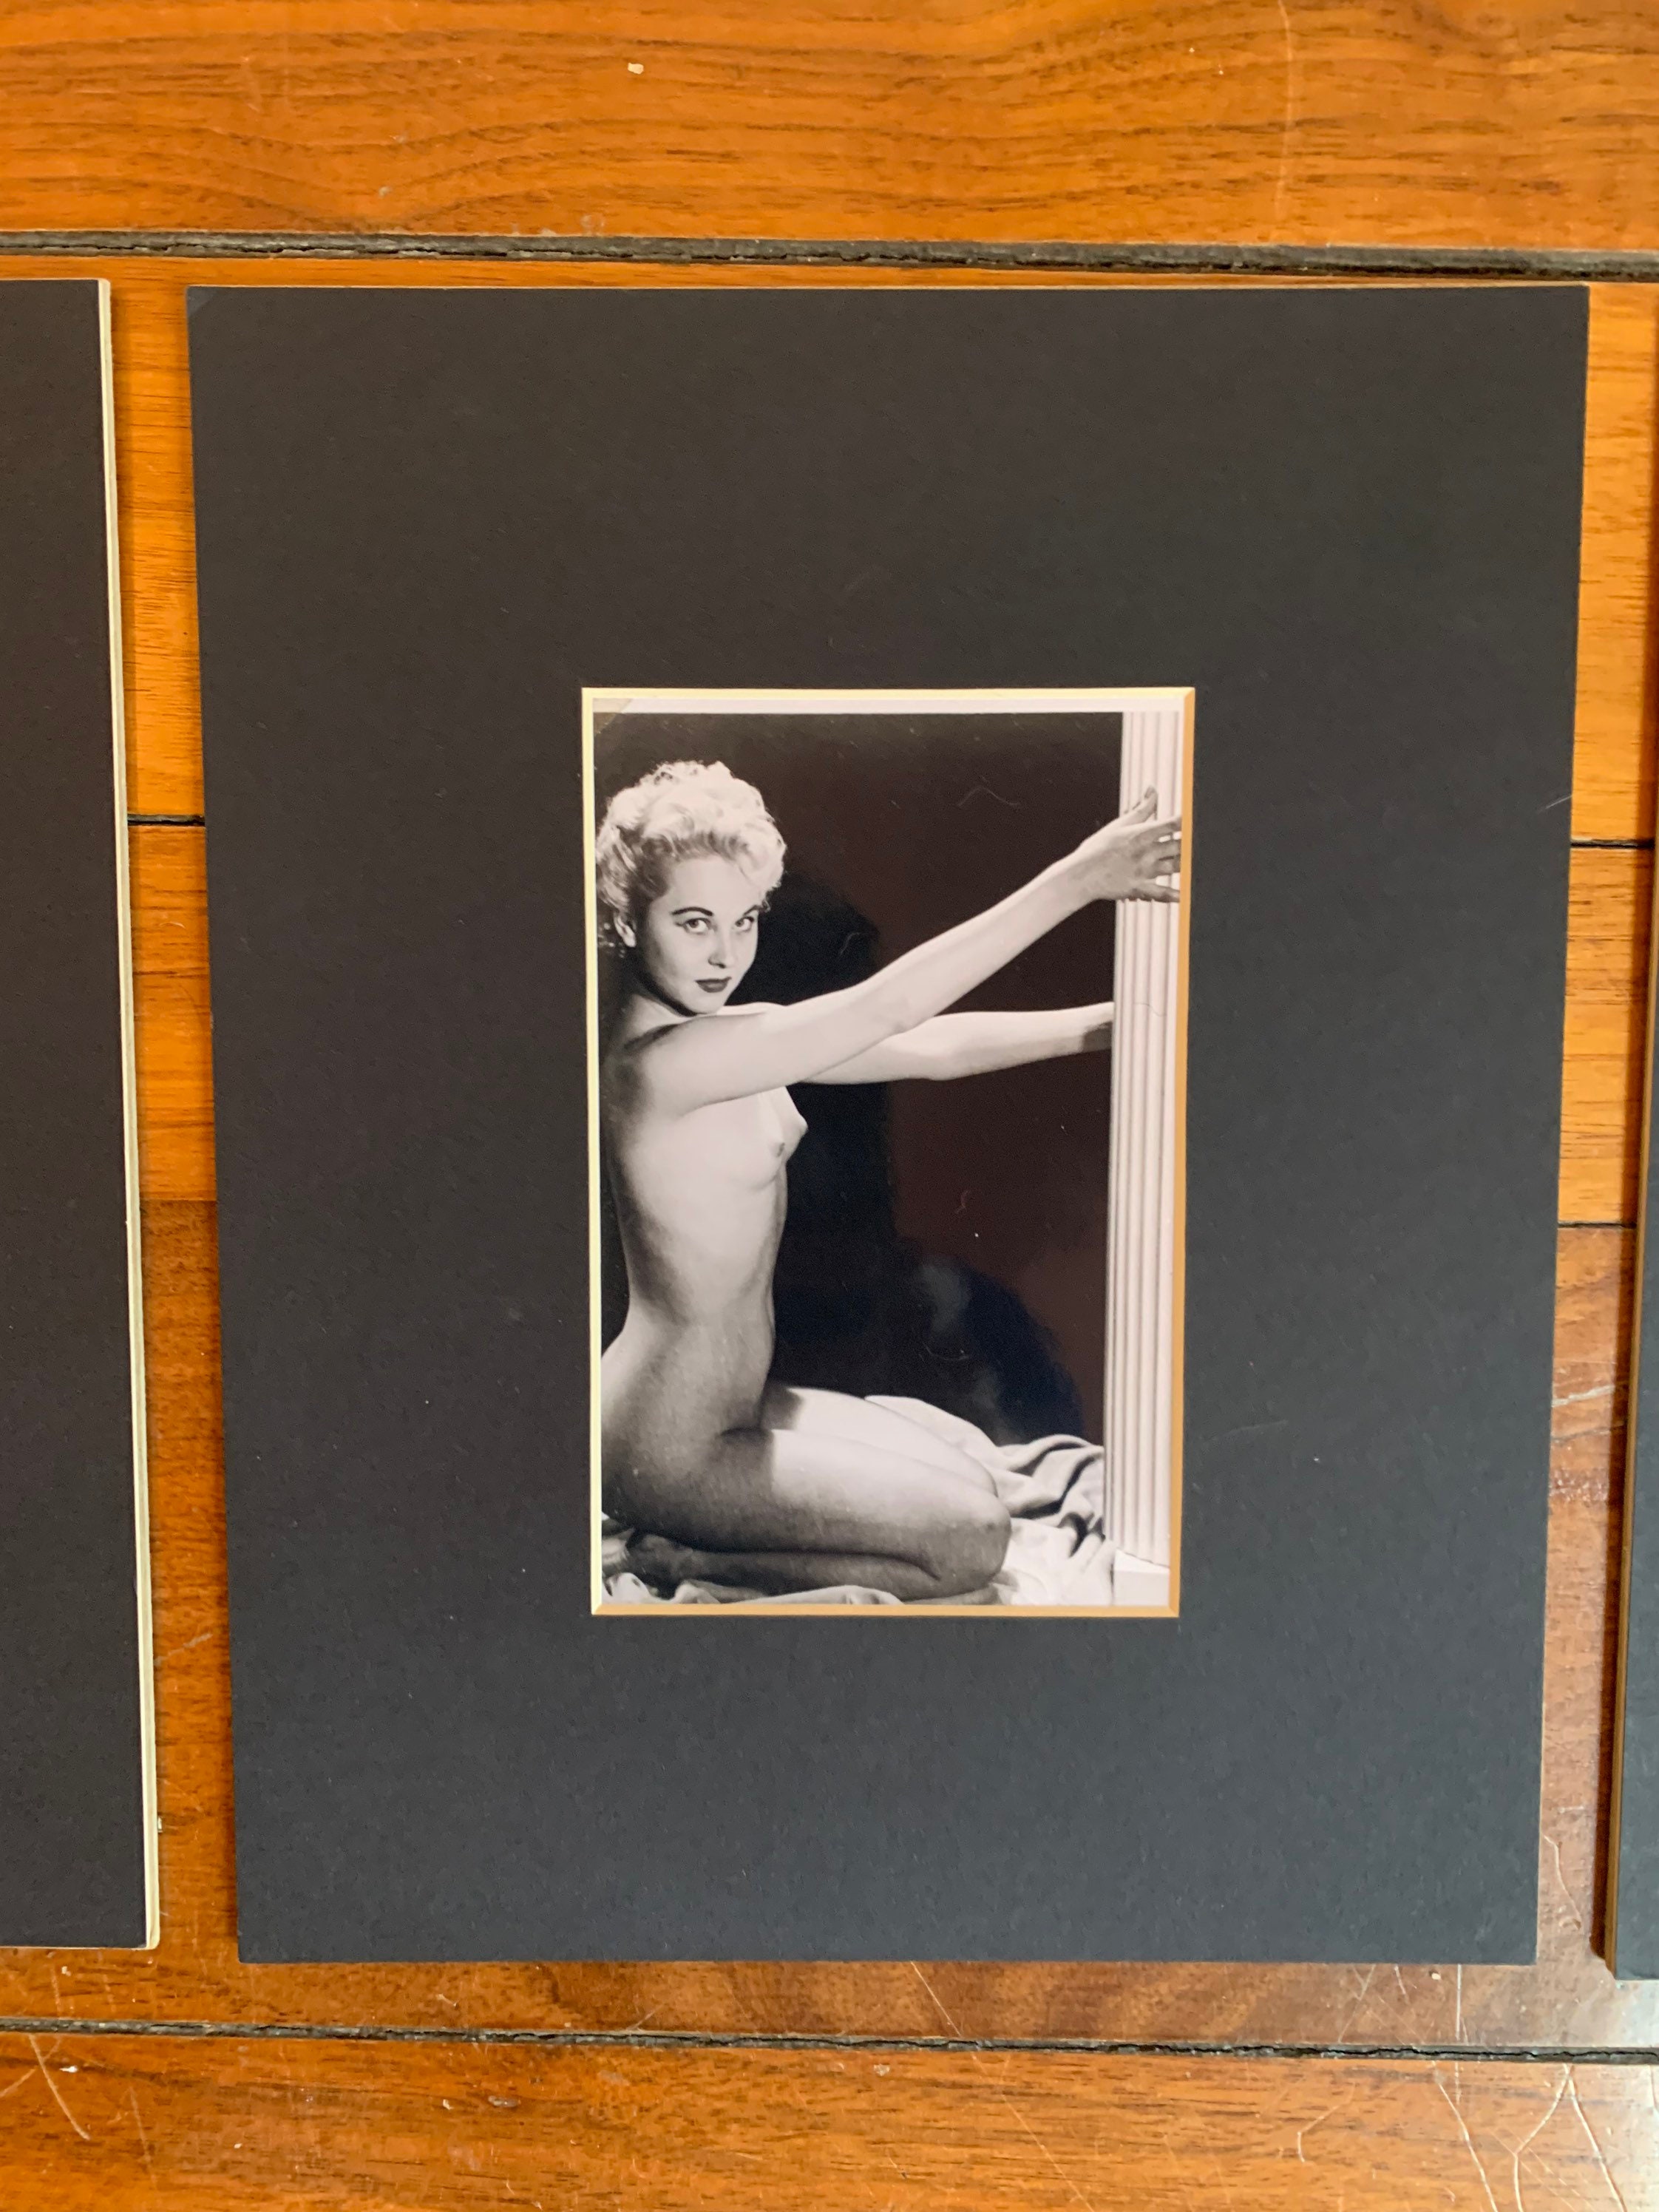 1940s Art Photographs Of Nude Women